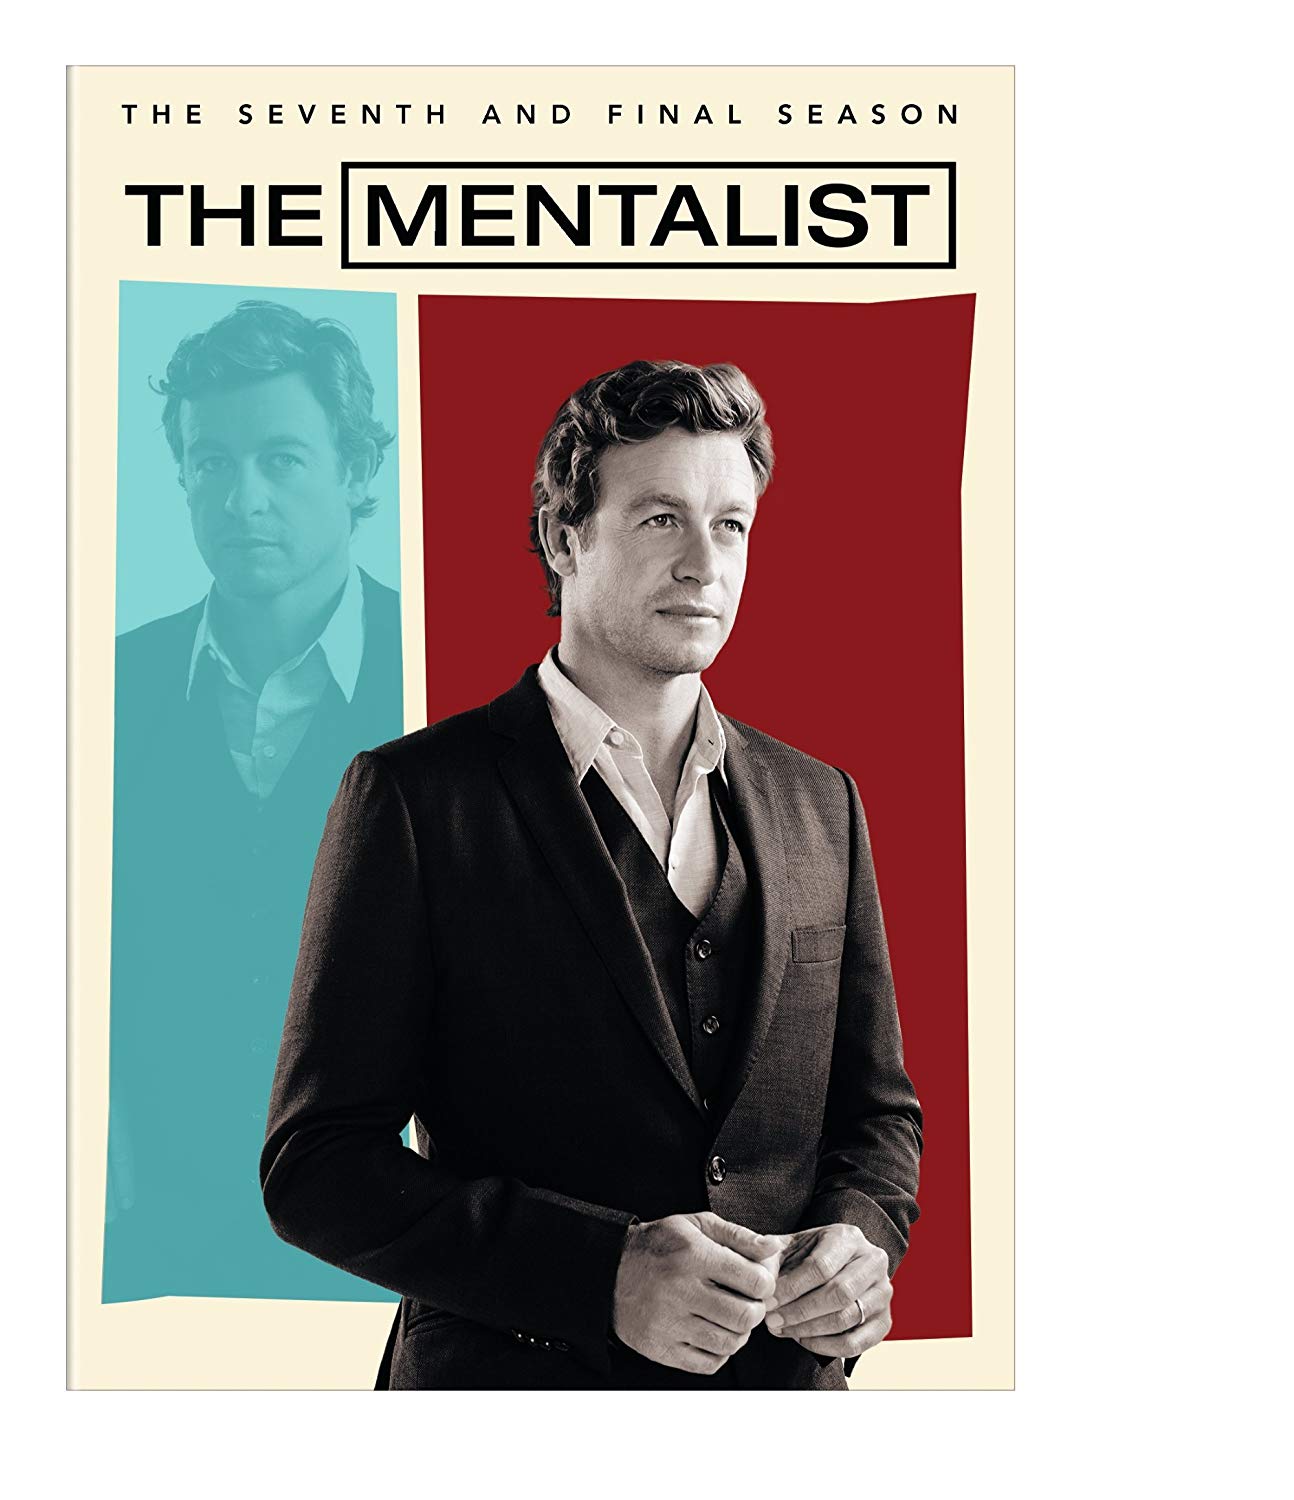 the mentalist wallpaper,text,poster,album cover,white collar worker,magazine